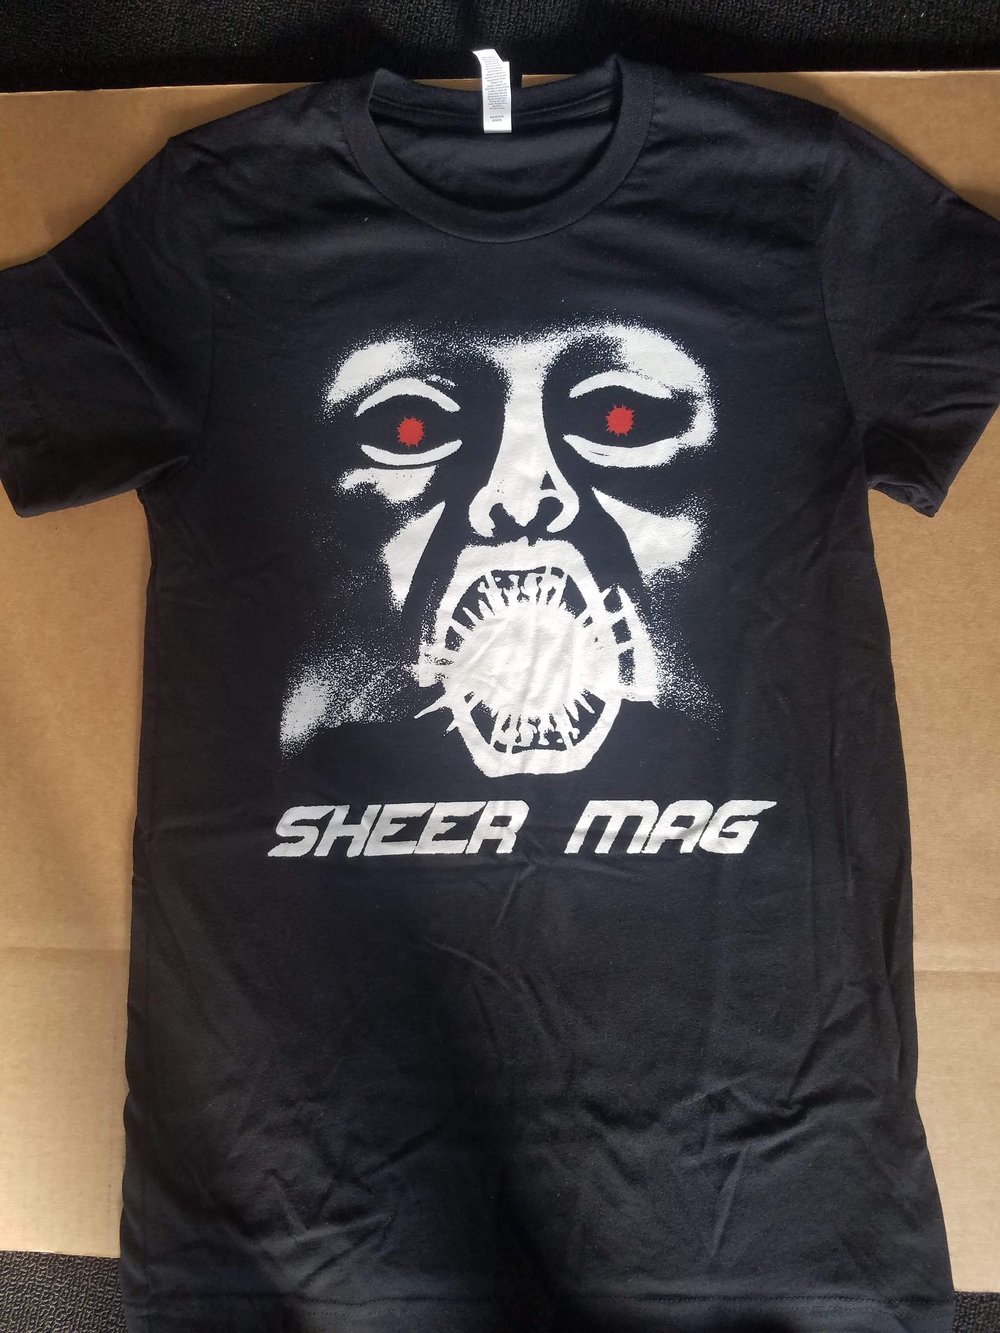 SHEER MAG "A DISTANT CALL" TOUR SHIRT